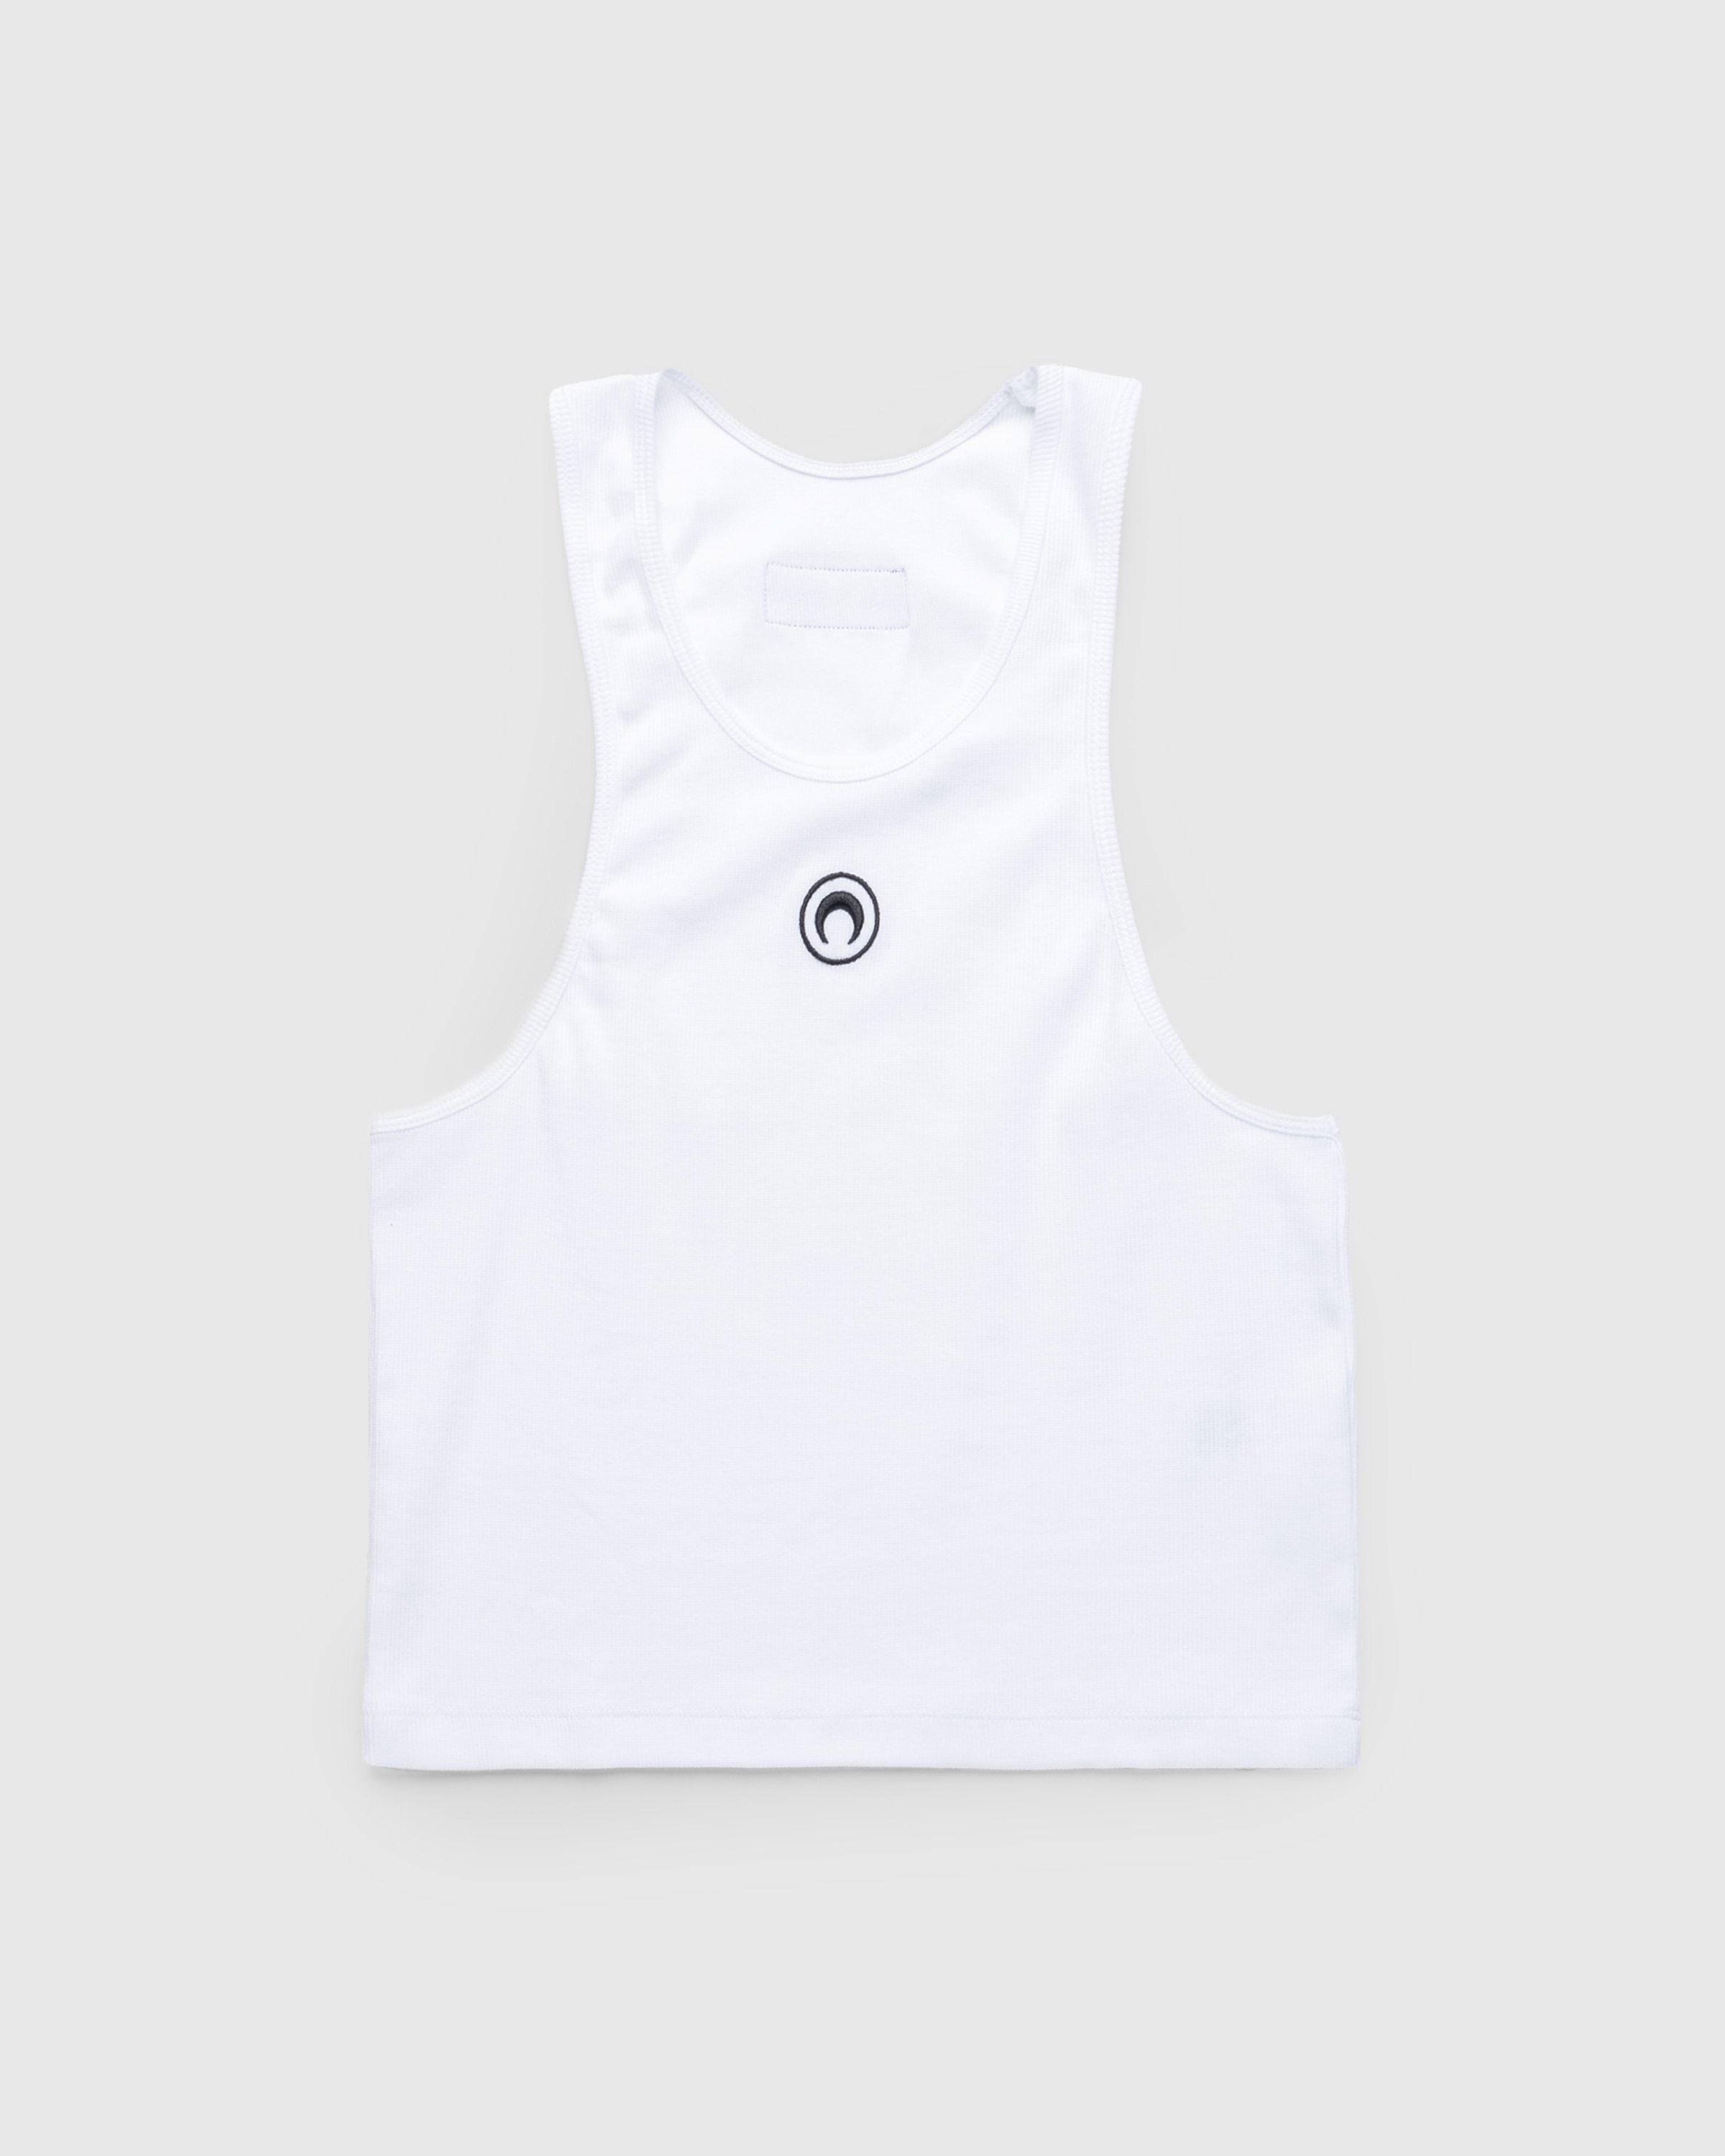 Marine Serre - Organic Cotton Tank Top White - Clothing - undefined - Image 1